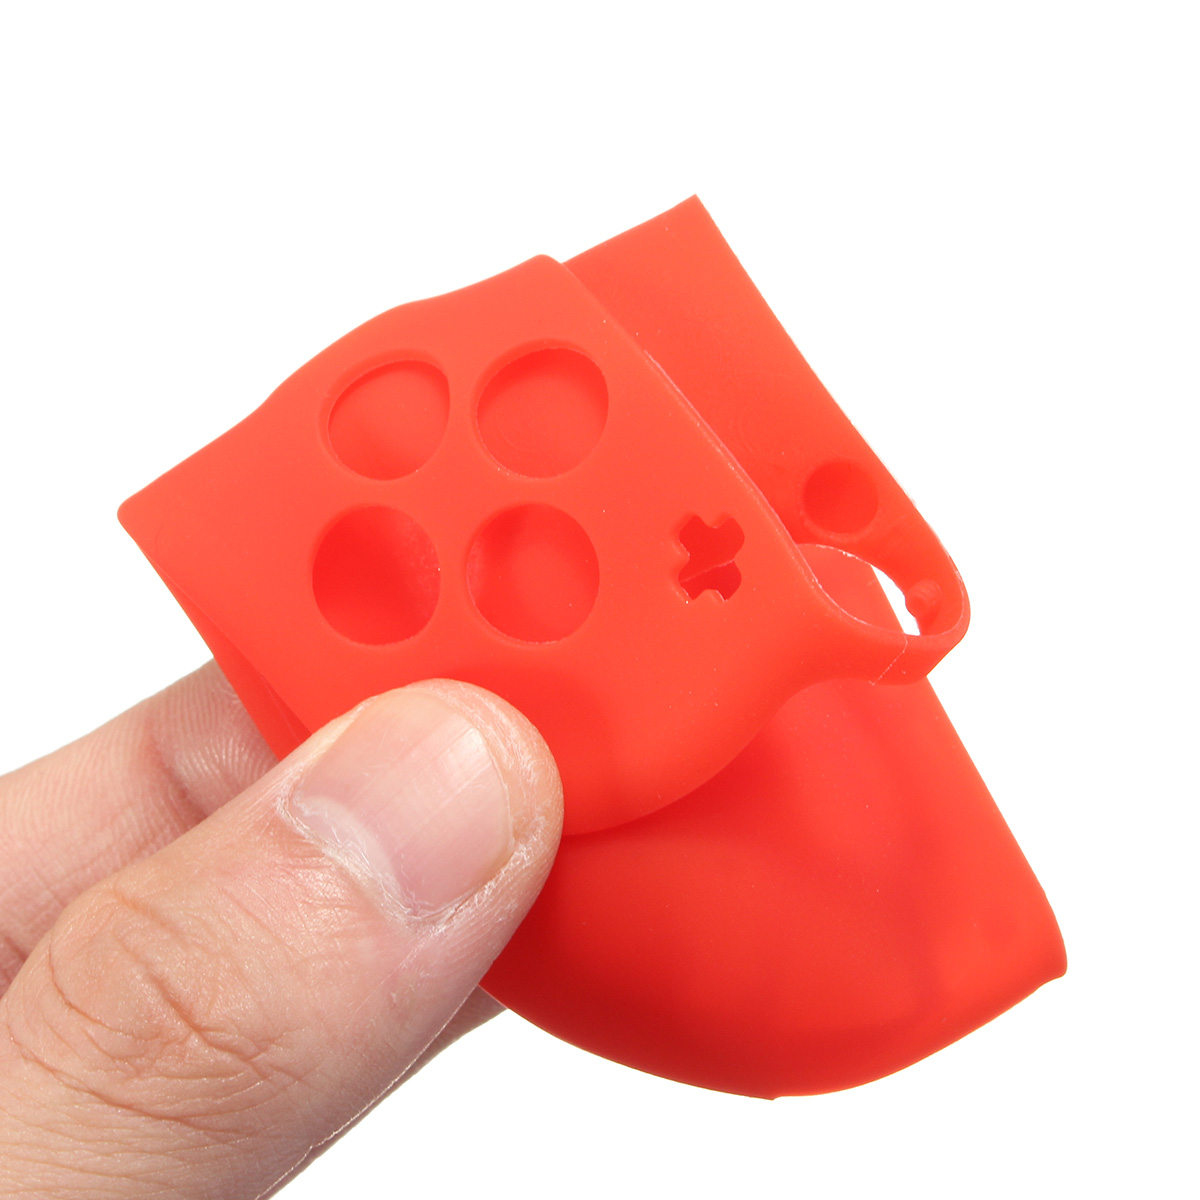 Silicon Case Protective Impact Resistant Rubber Skin Cover For Nintendo Switch Joy-Con Controller 78